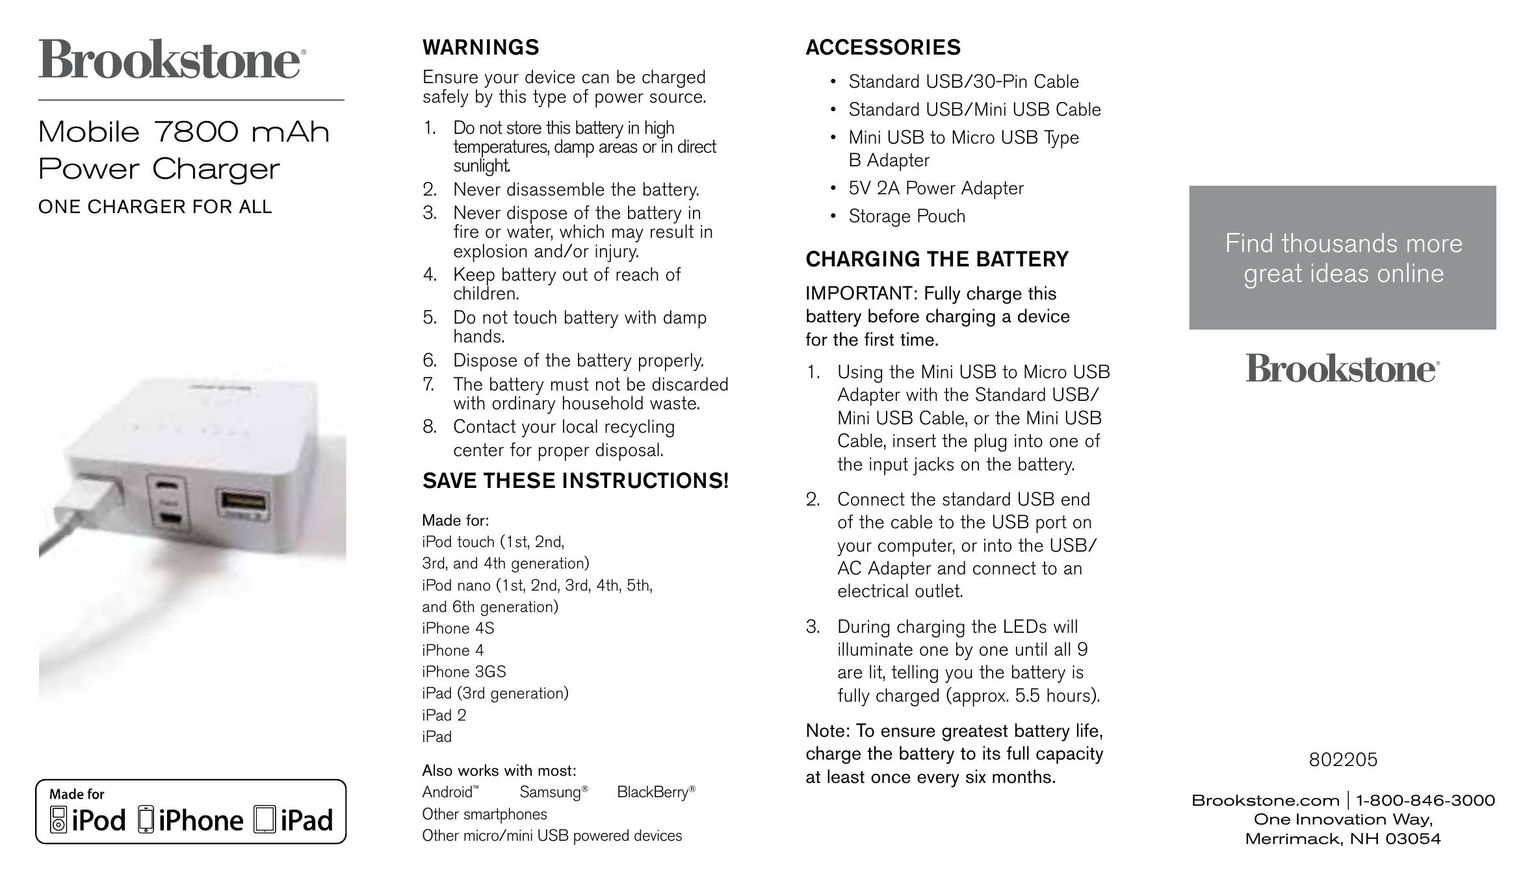 Brookstone Mobile 7800 mAh MP3 Player Accessories User Manual